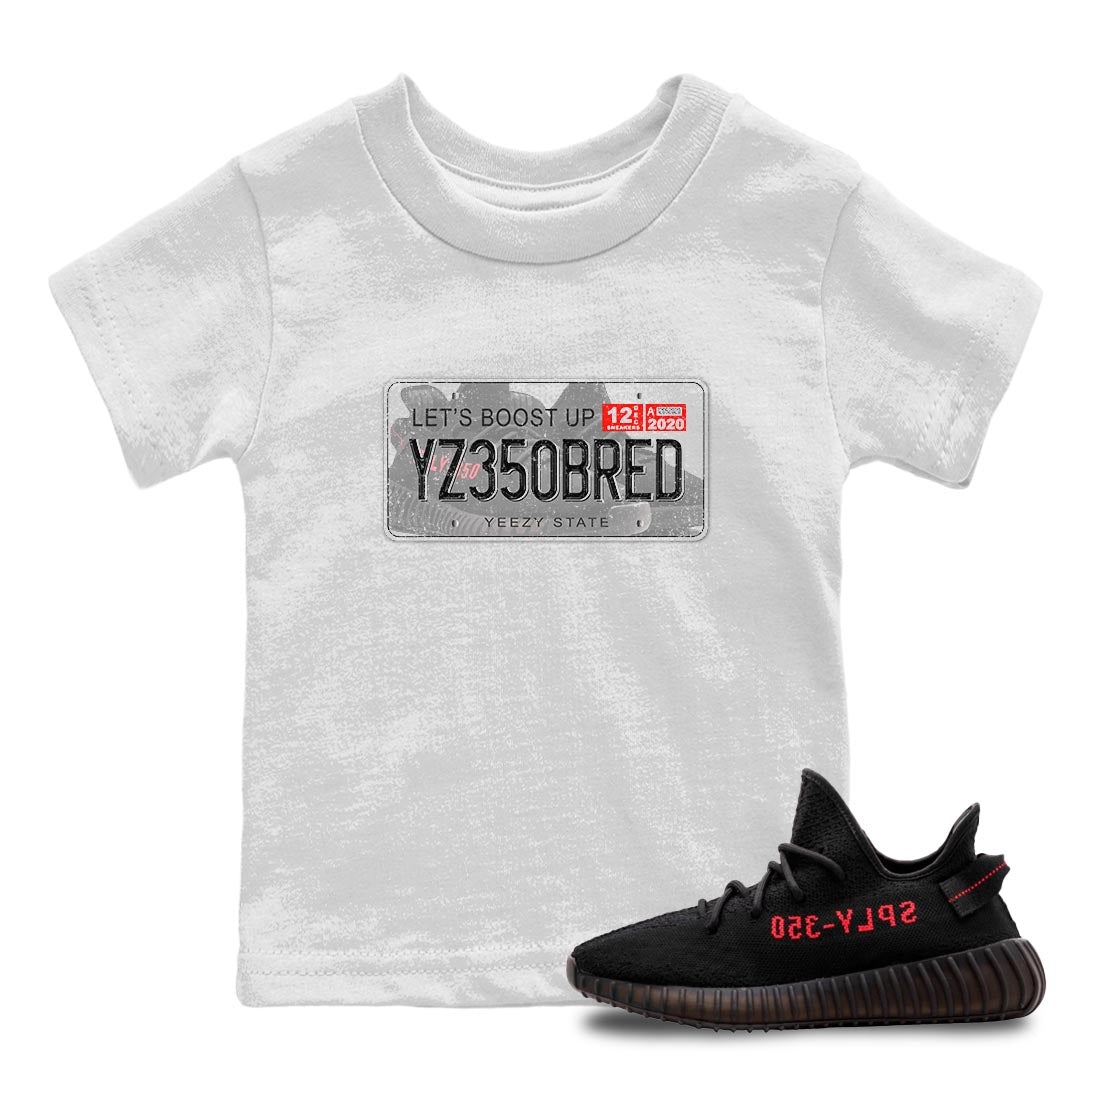 Yeezy 350 Bred shirt to match jordans Yeezy Plate Streetwear Sneaker Shirt Yeezy Boost 350 V2 Bred Drip Gear Zone Sneaker Matching Clothing Baby Toddler White 1 T-Shirt